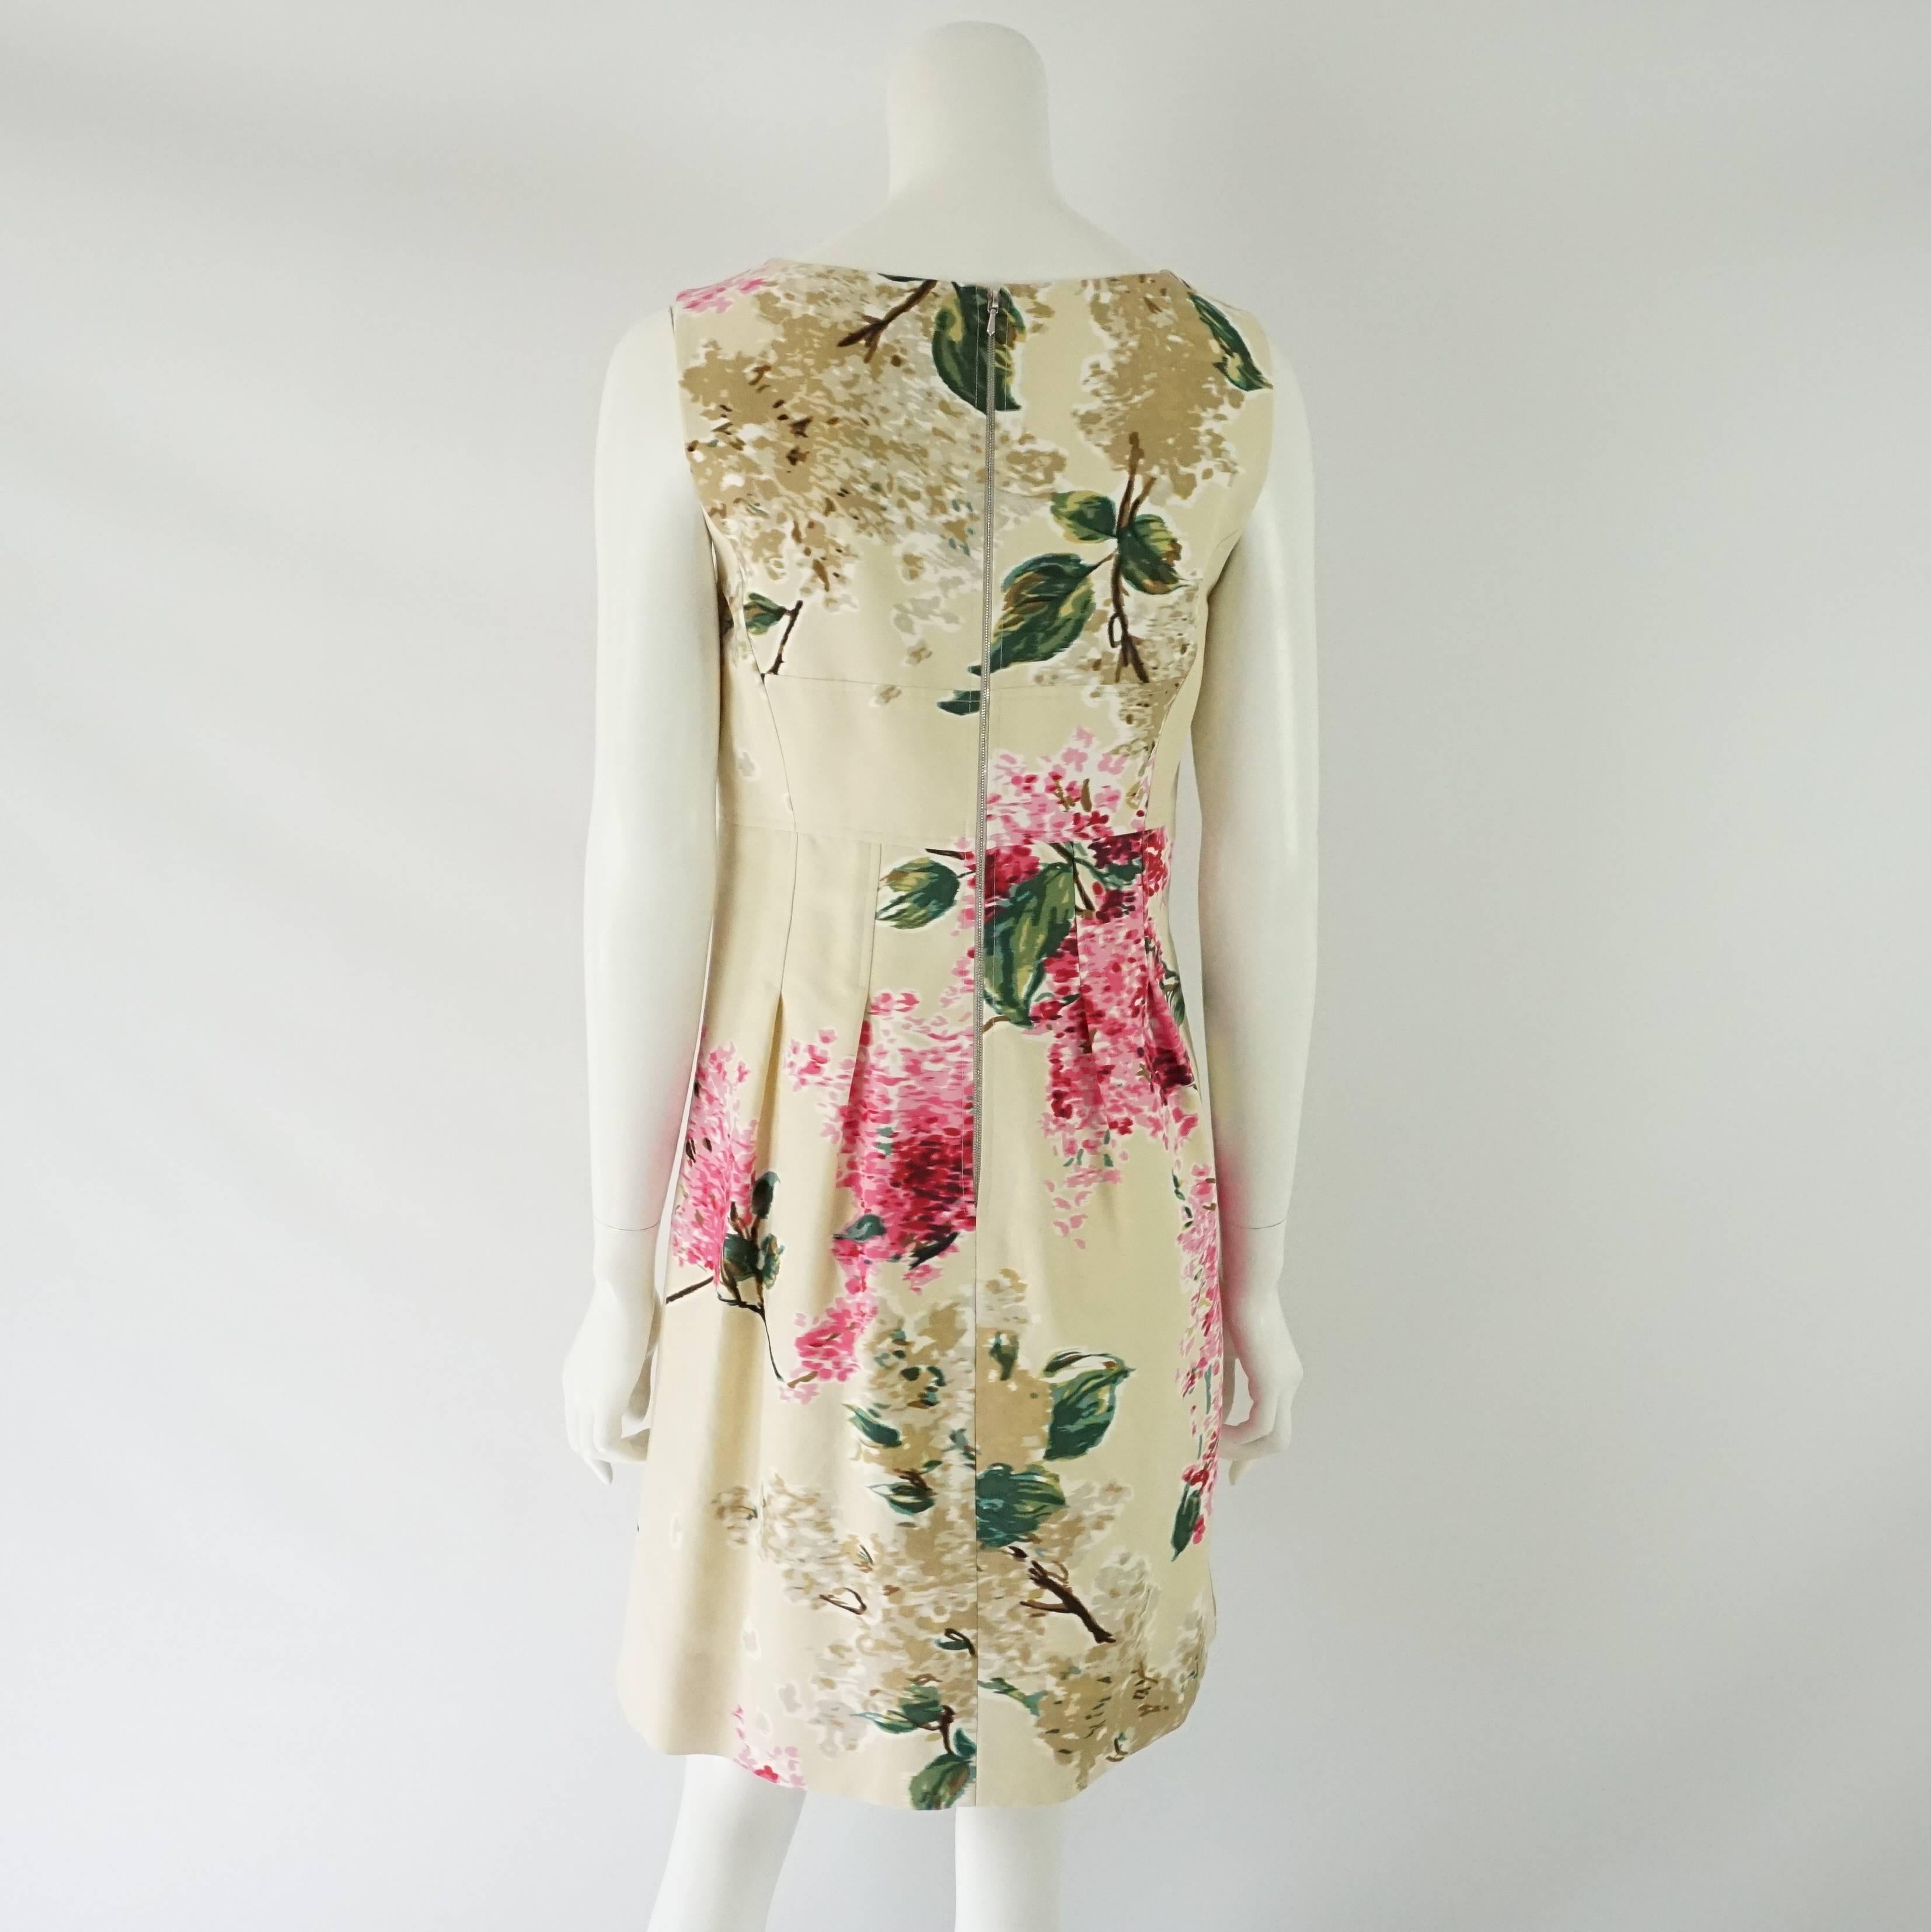 Beige Lela Rose Tan and Pink Floral Print Sleeveless Dress - 6